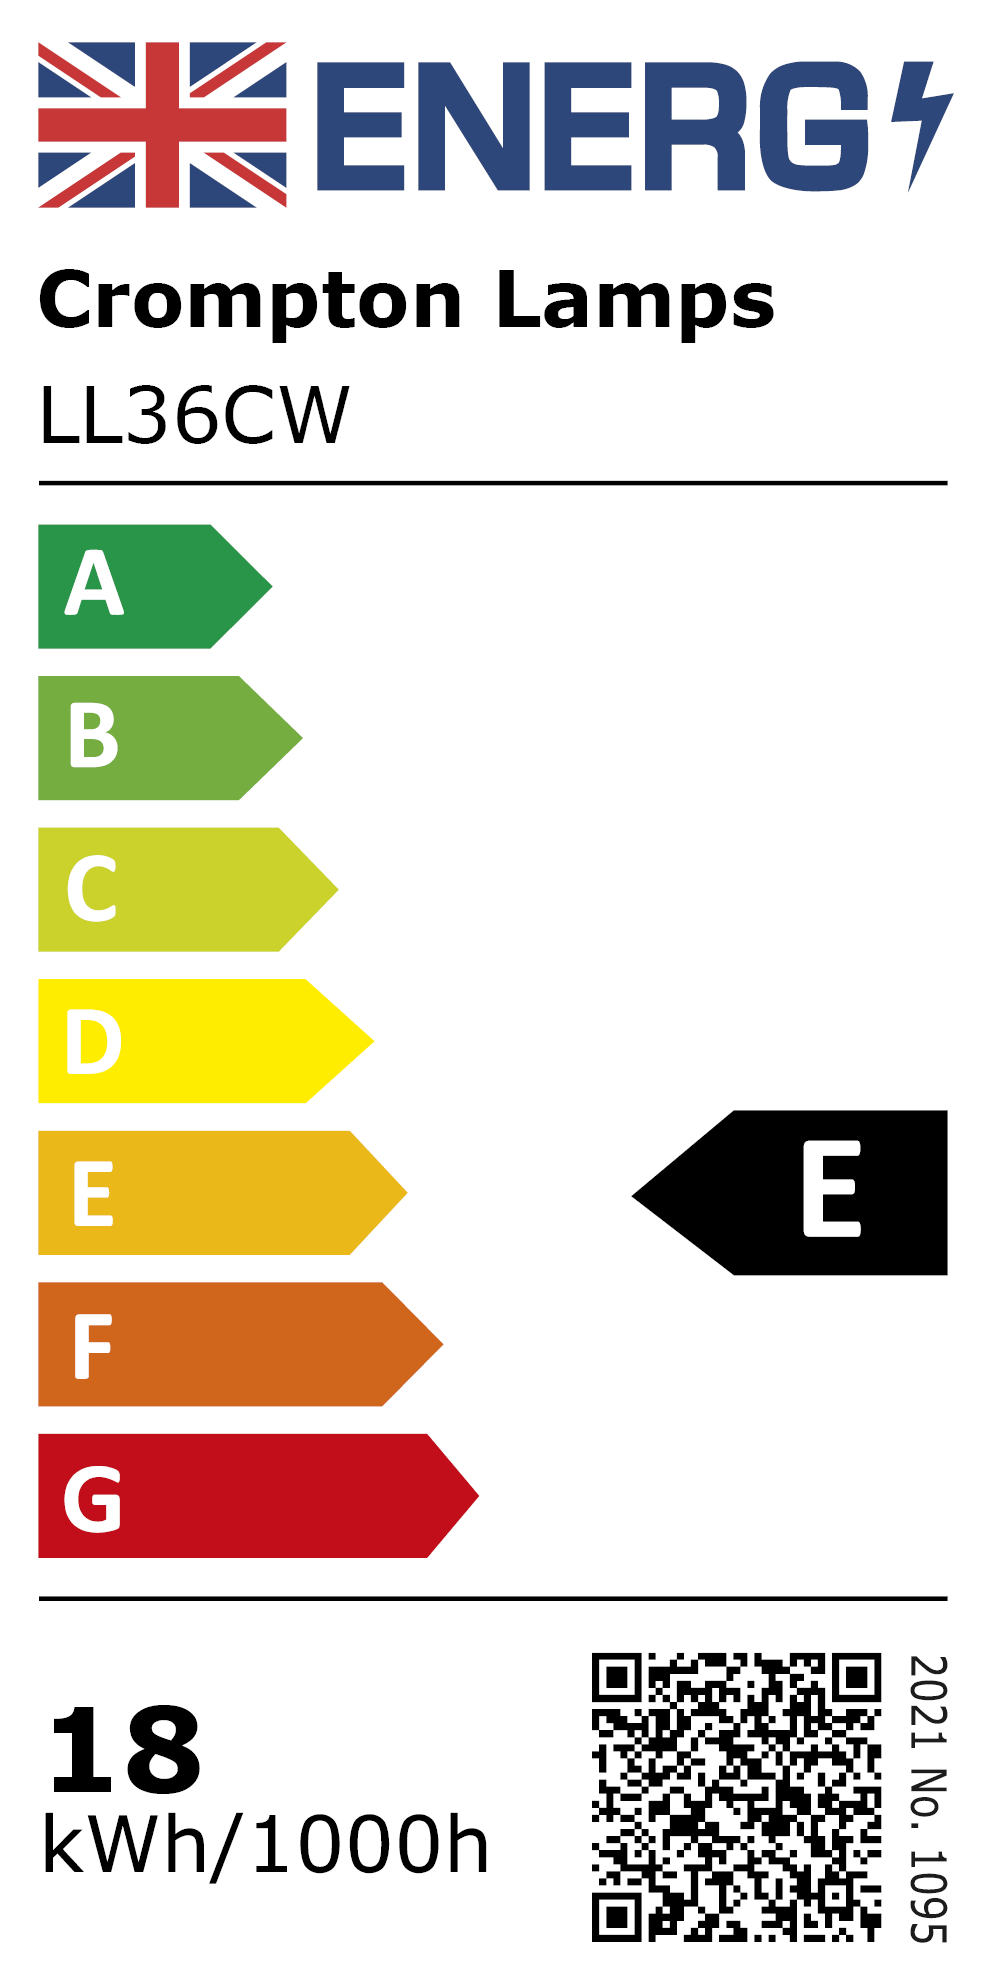 New 2021 Energy Rating Label: MPN LL36CW